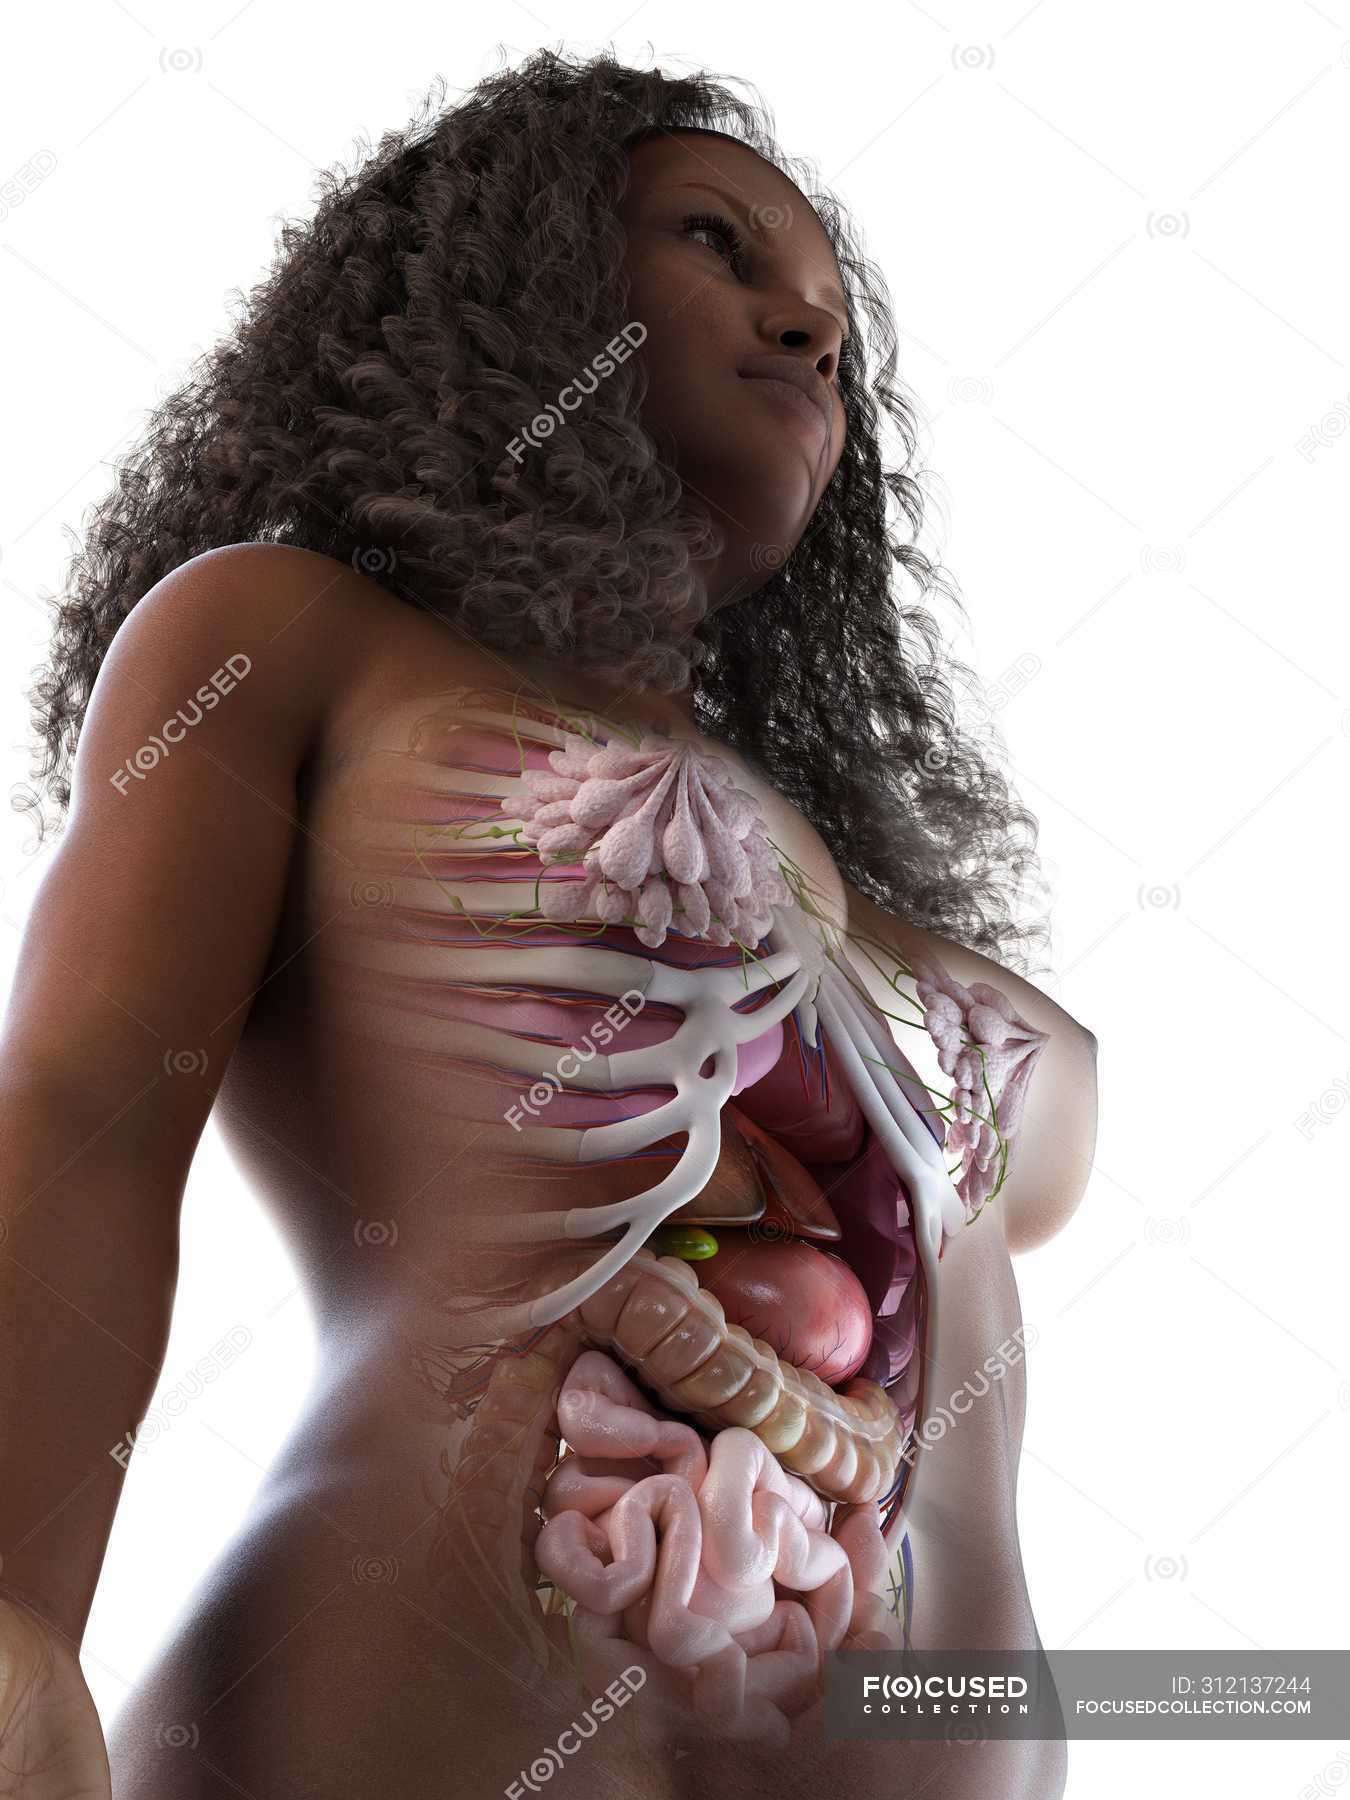 Female Abdominal Organs Computer Illustration Human Anatomy Digestive System Stock Photo 312137244